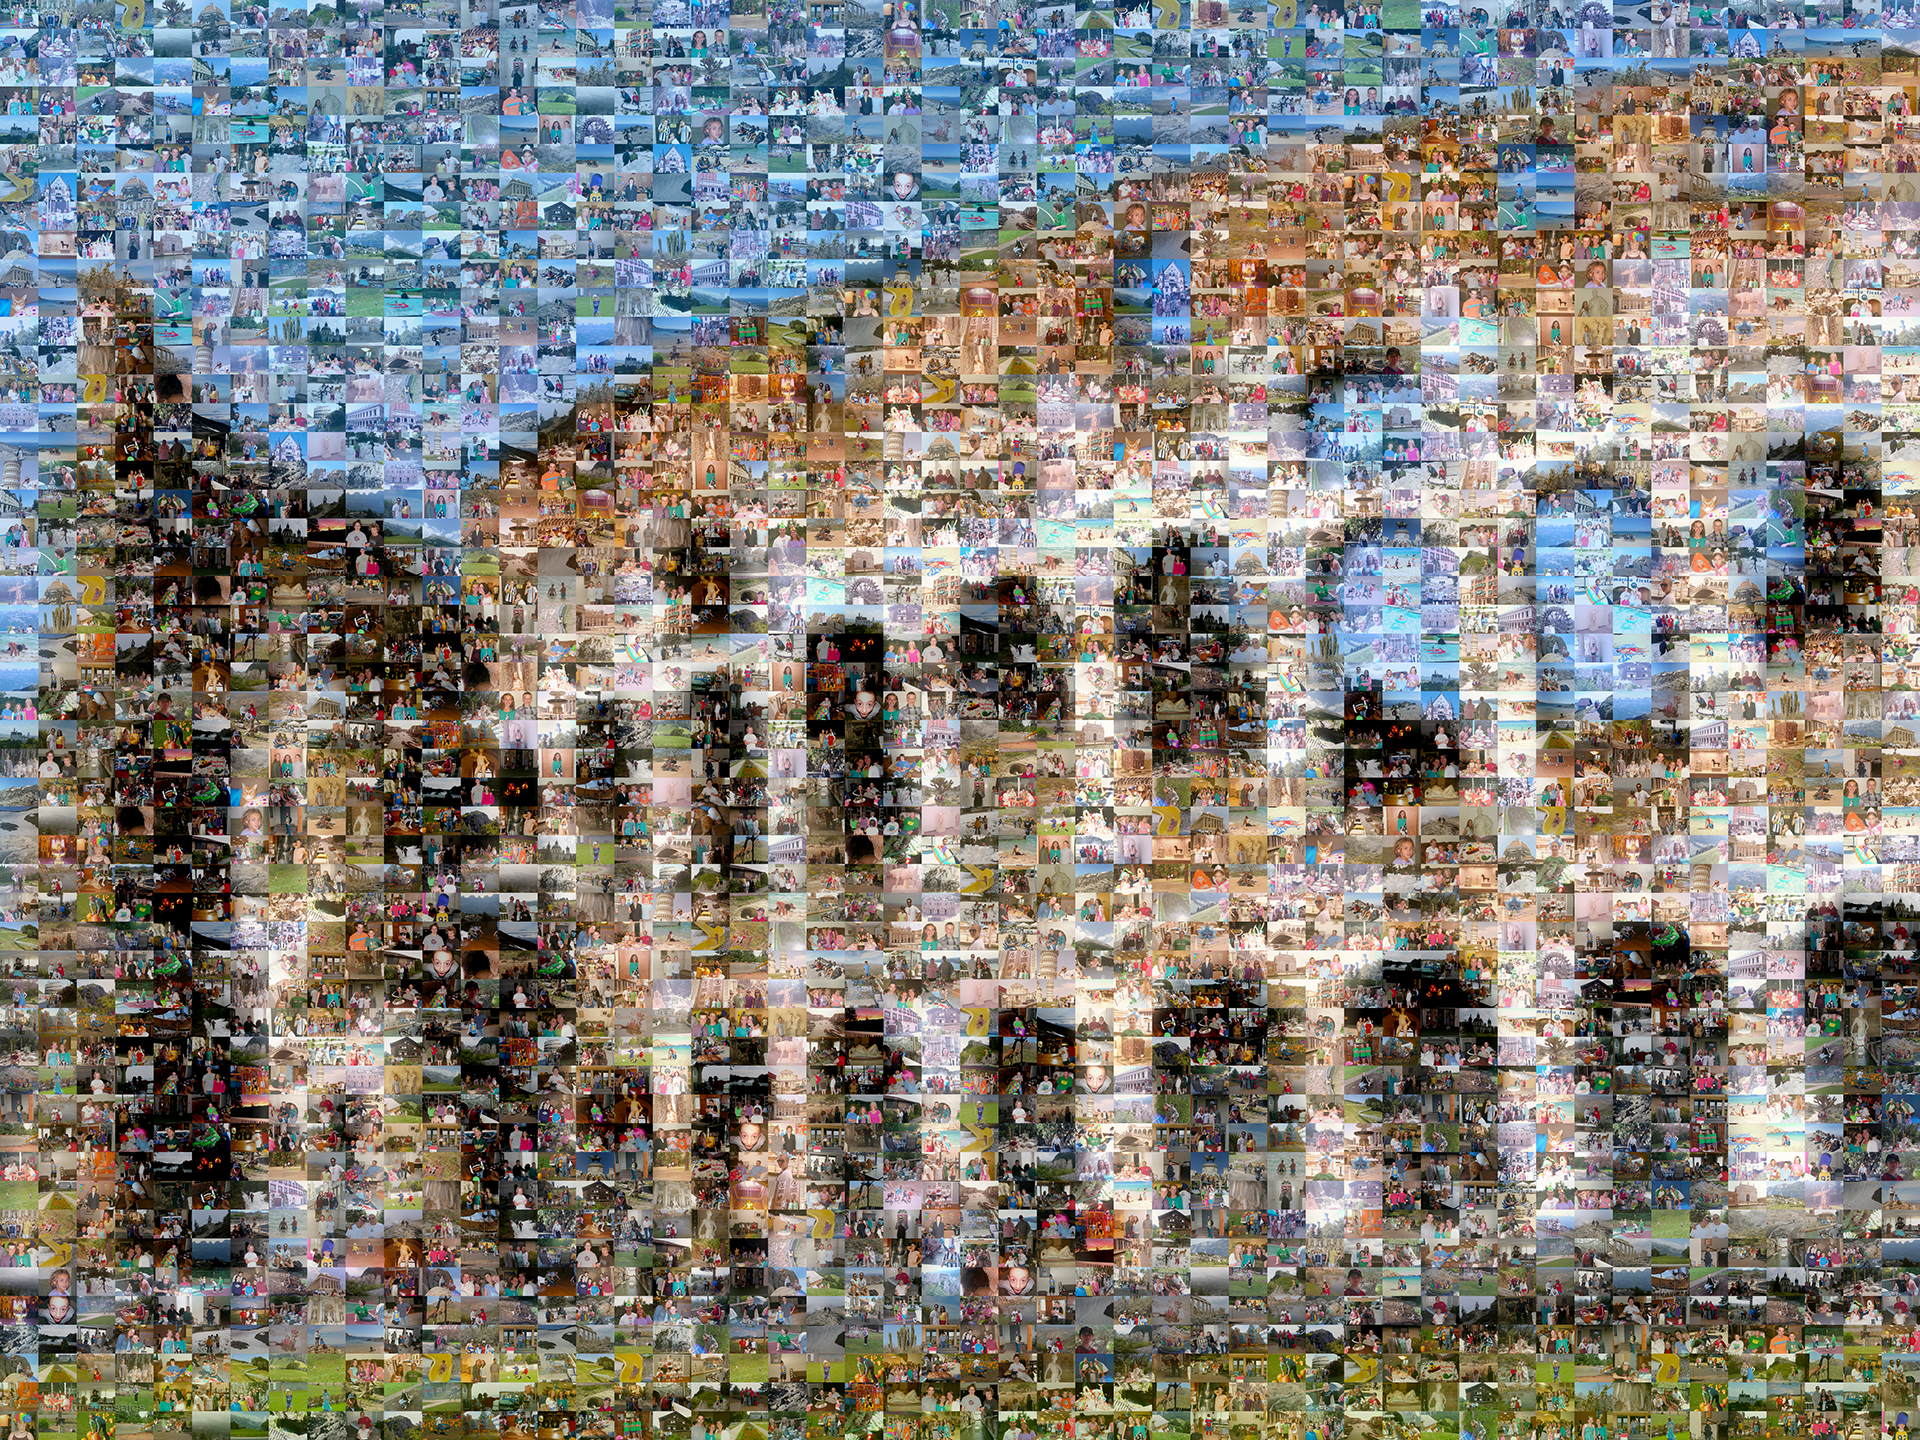 photo mosaic created using 369 customer selected photos